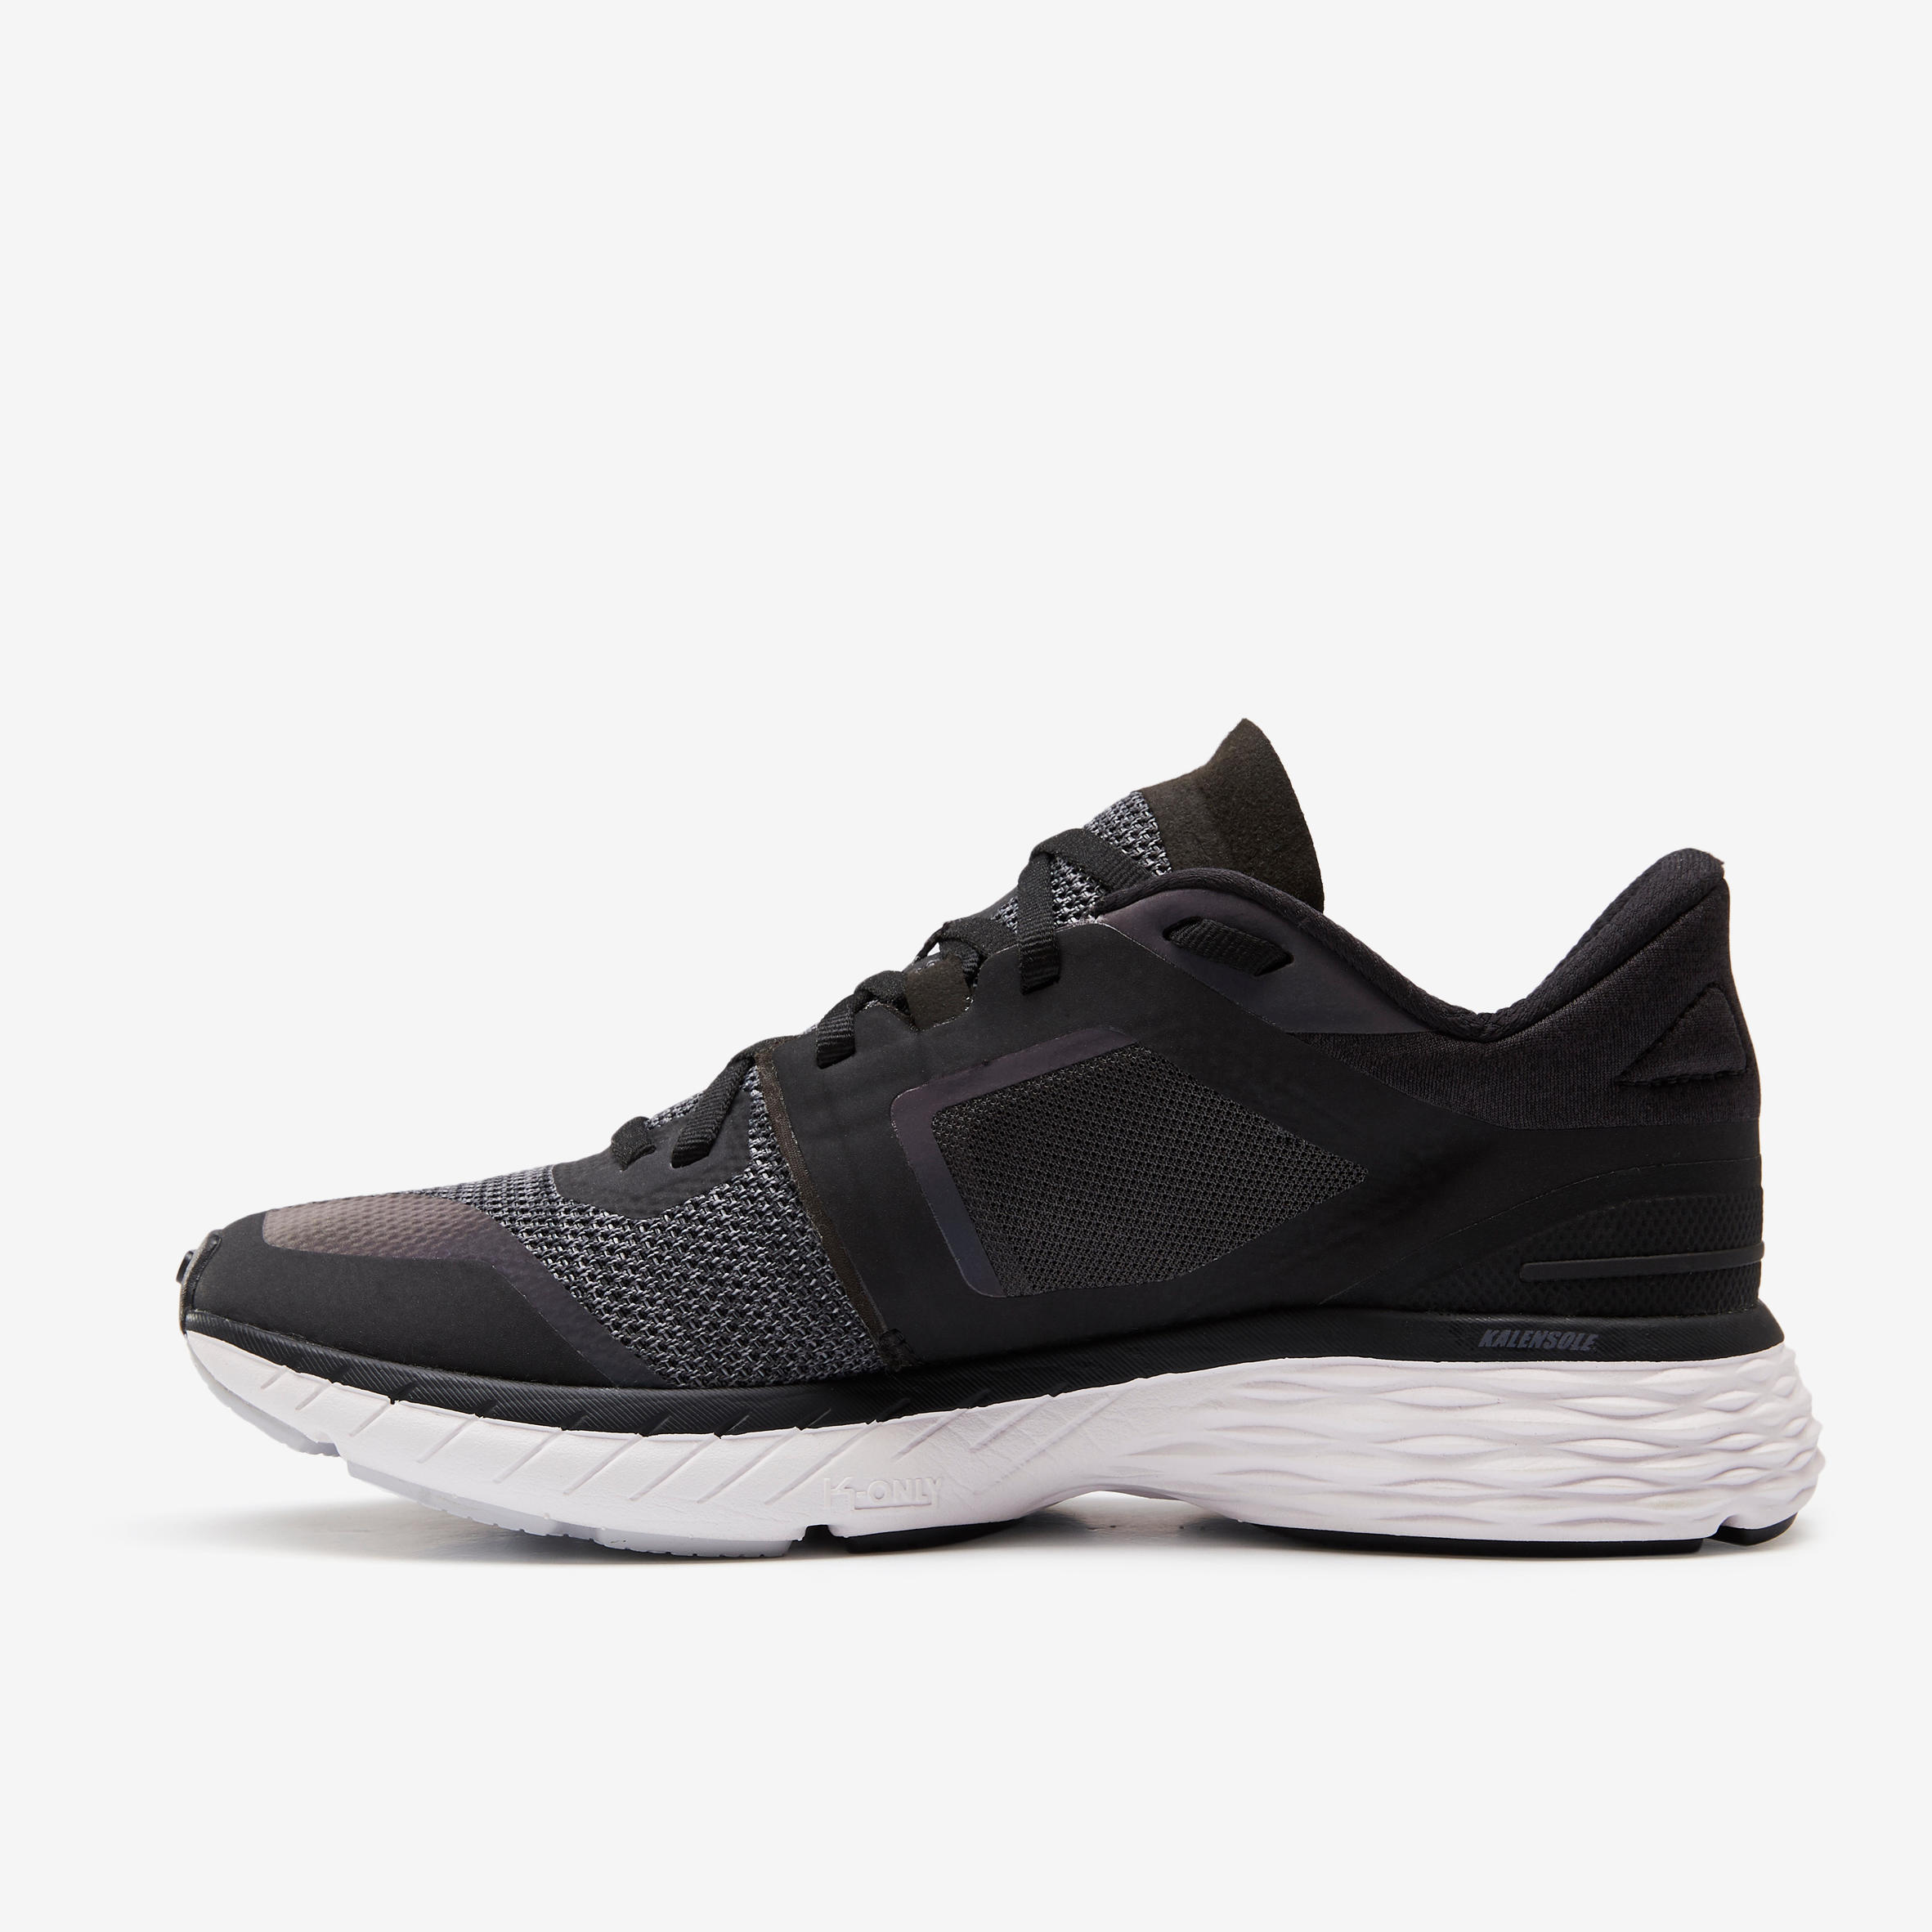 Women's Running Shoes - Run Comfort Dark Grey - Carbon grey - Kalenji ...